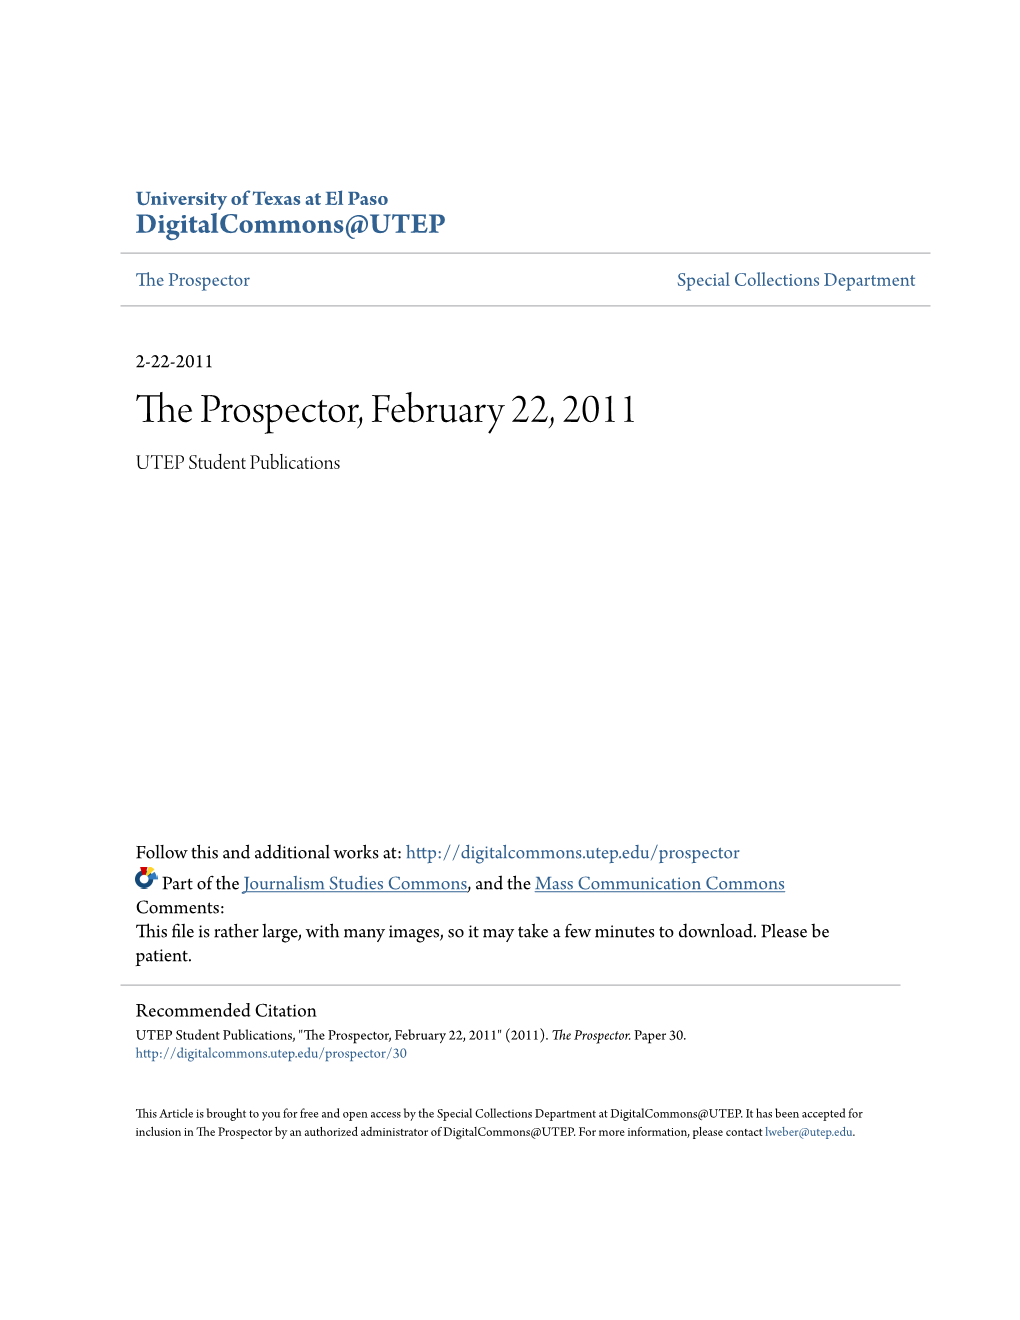 The Prospector, February 22, 2011